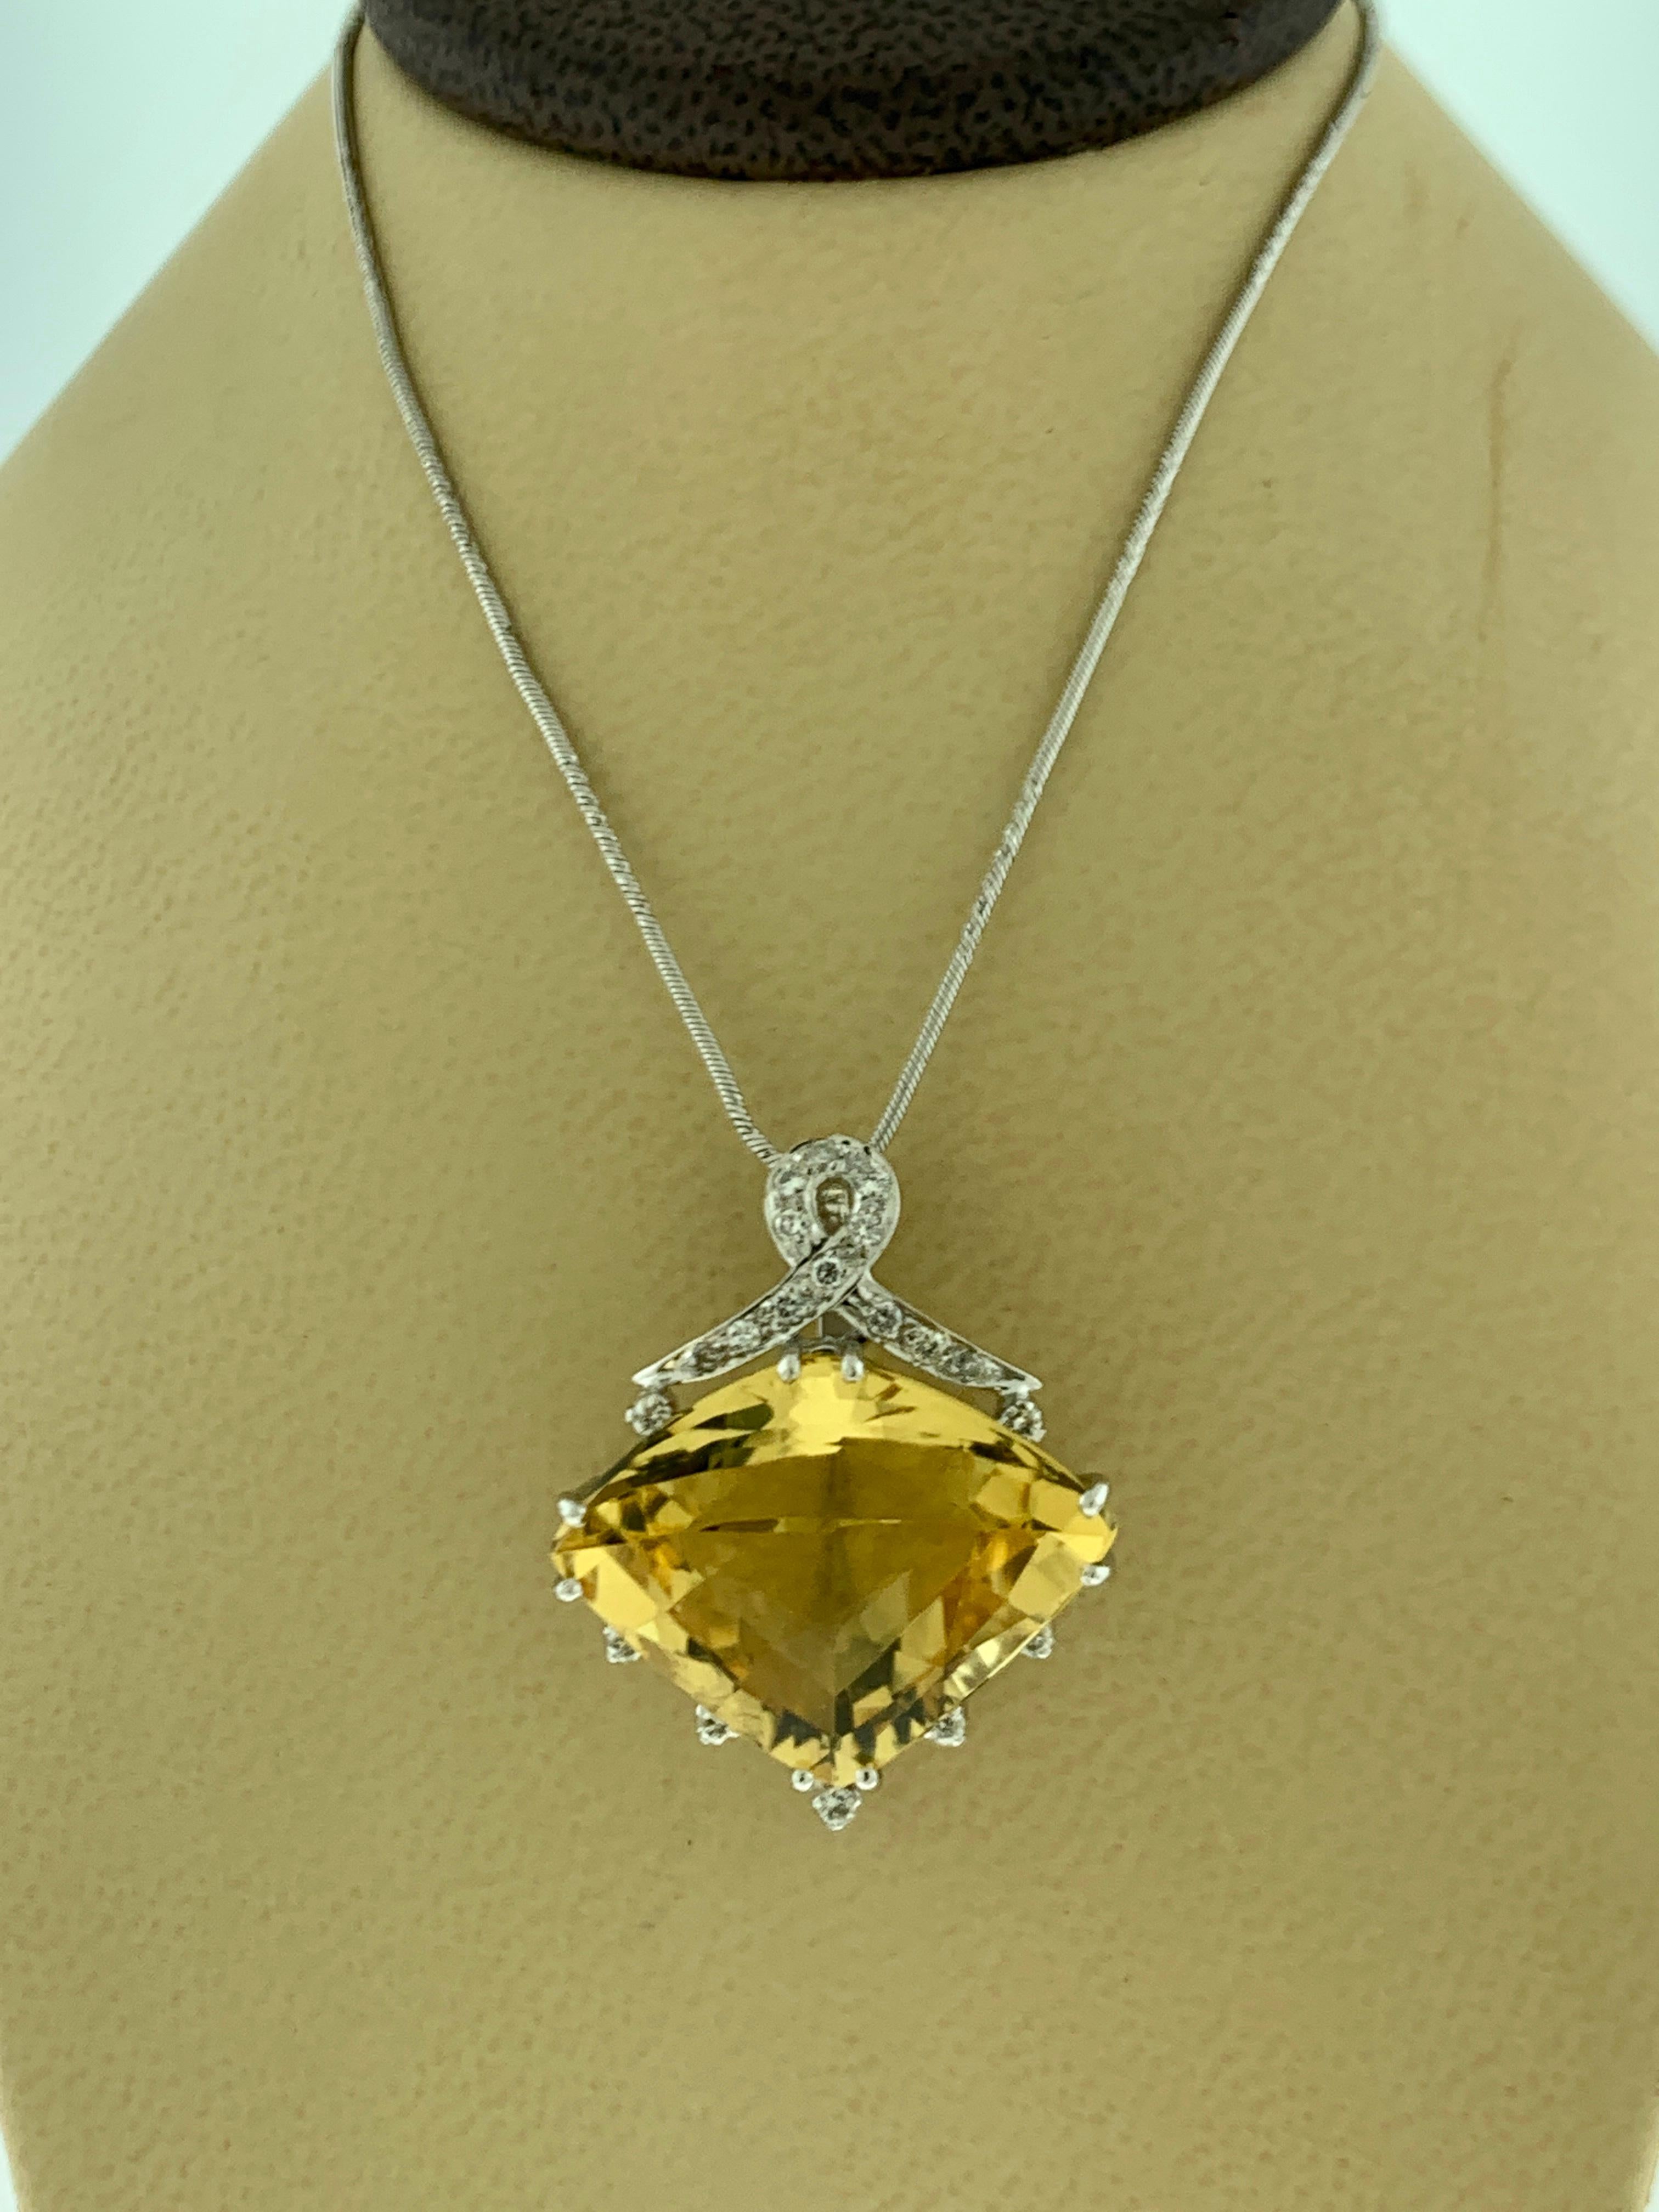 21 Carat Lemon Topaz and Diamond Pendant Necklace Enhancer, 18 Karat White Gold 5